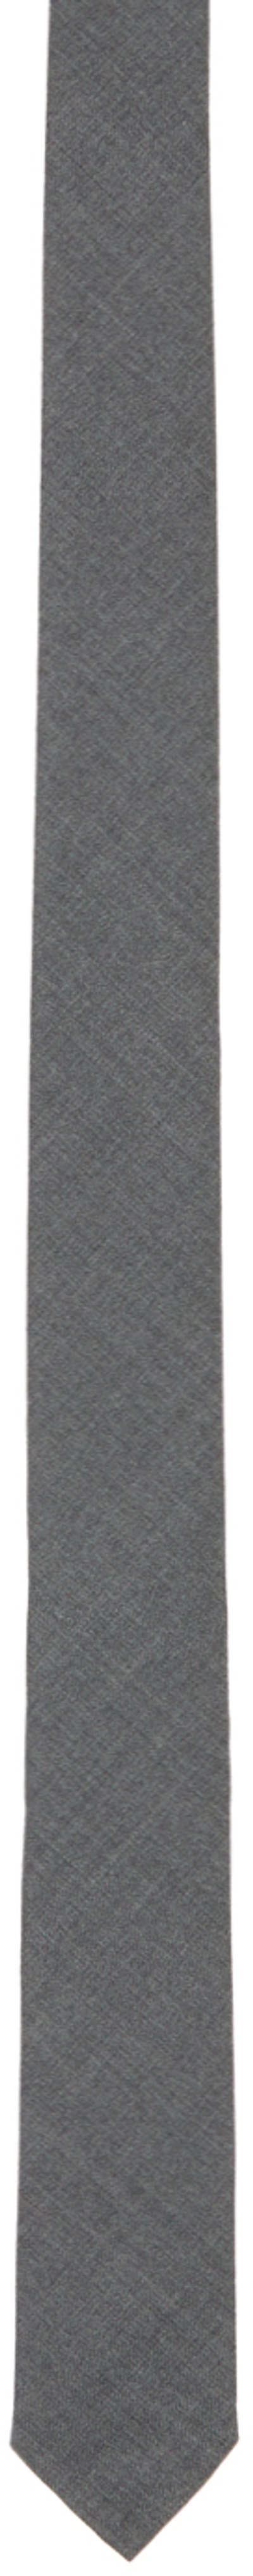 Thom Browne Grey Classic Tie In 035 Med Grey